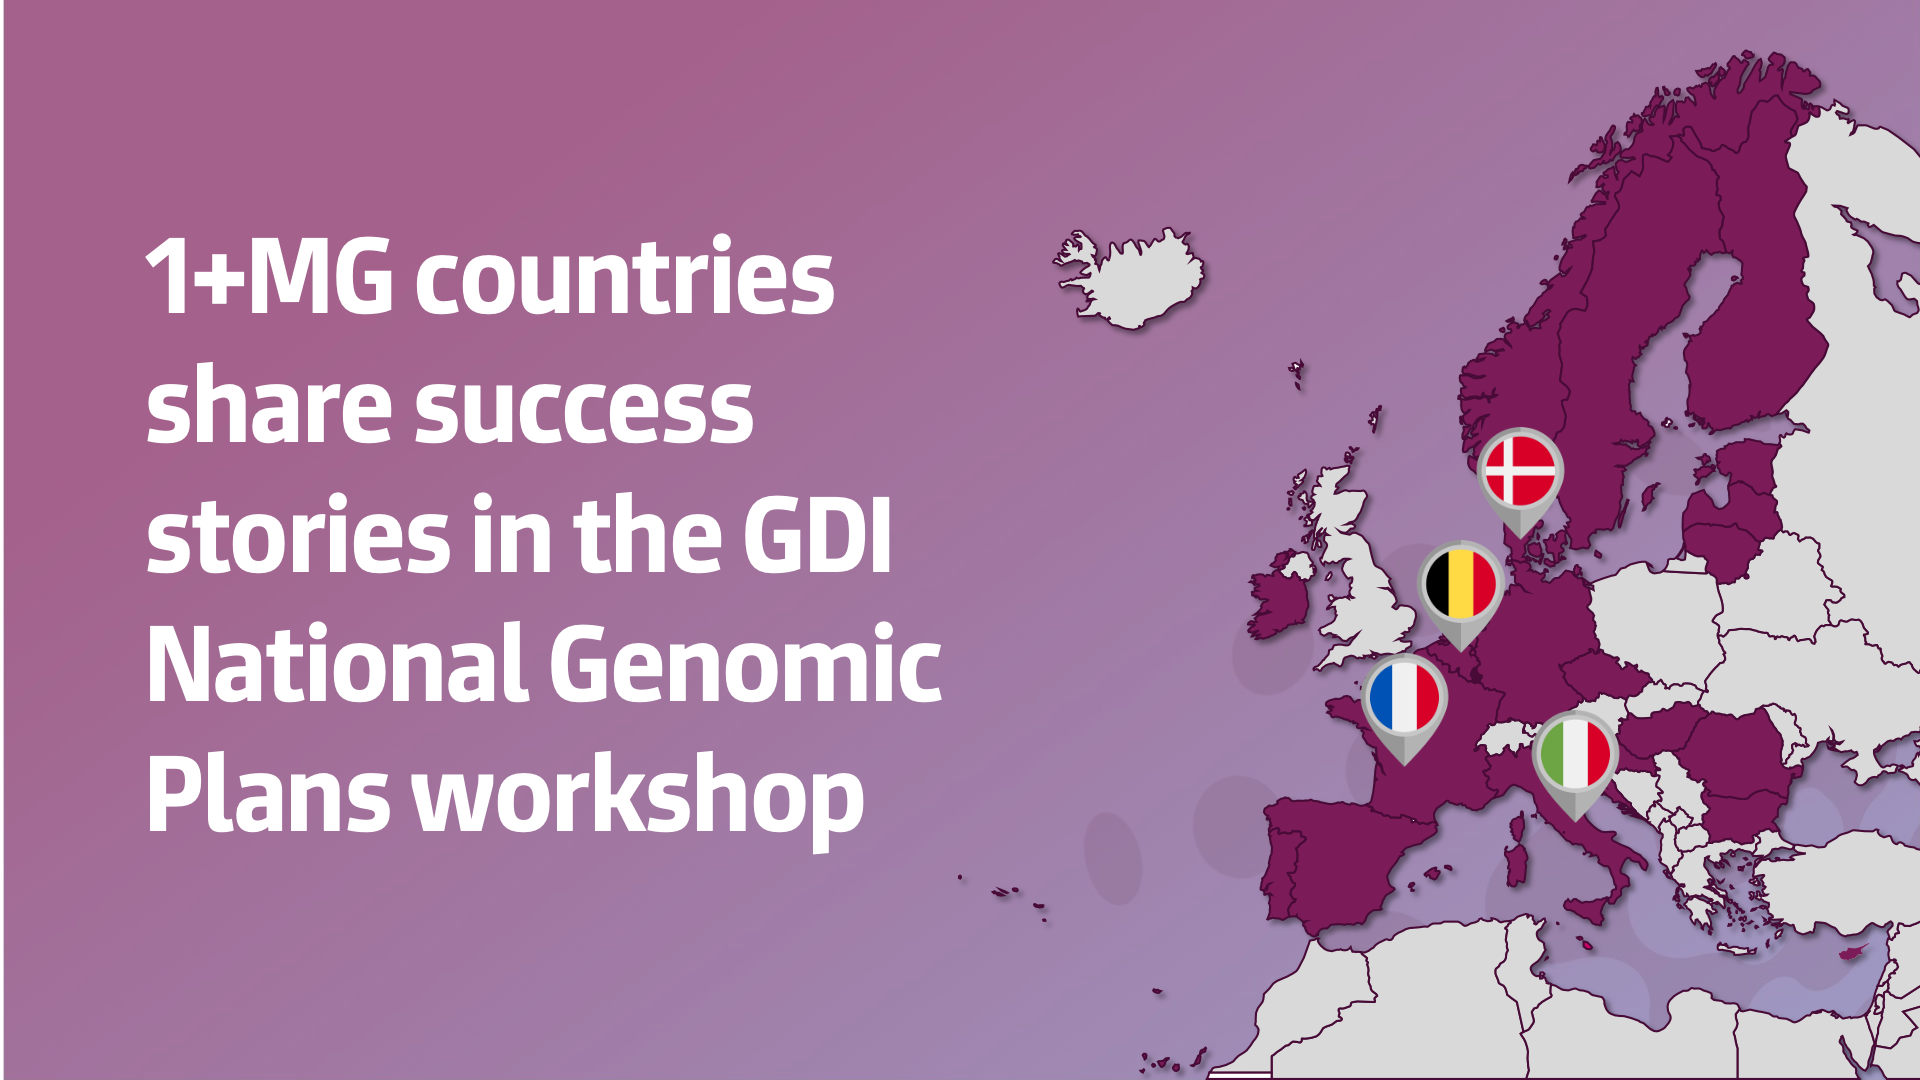 GDI National Genomic Plans workshop